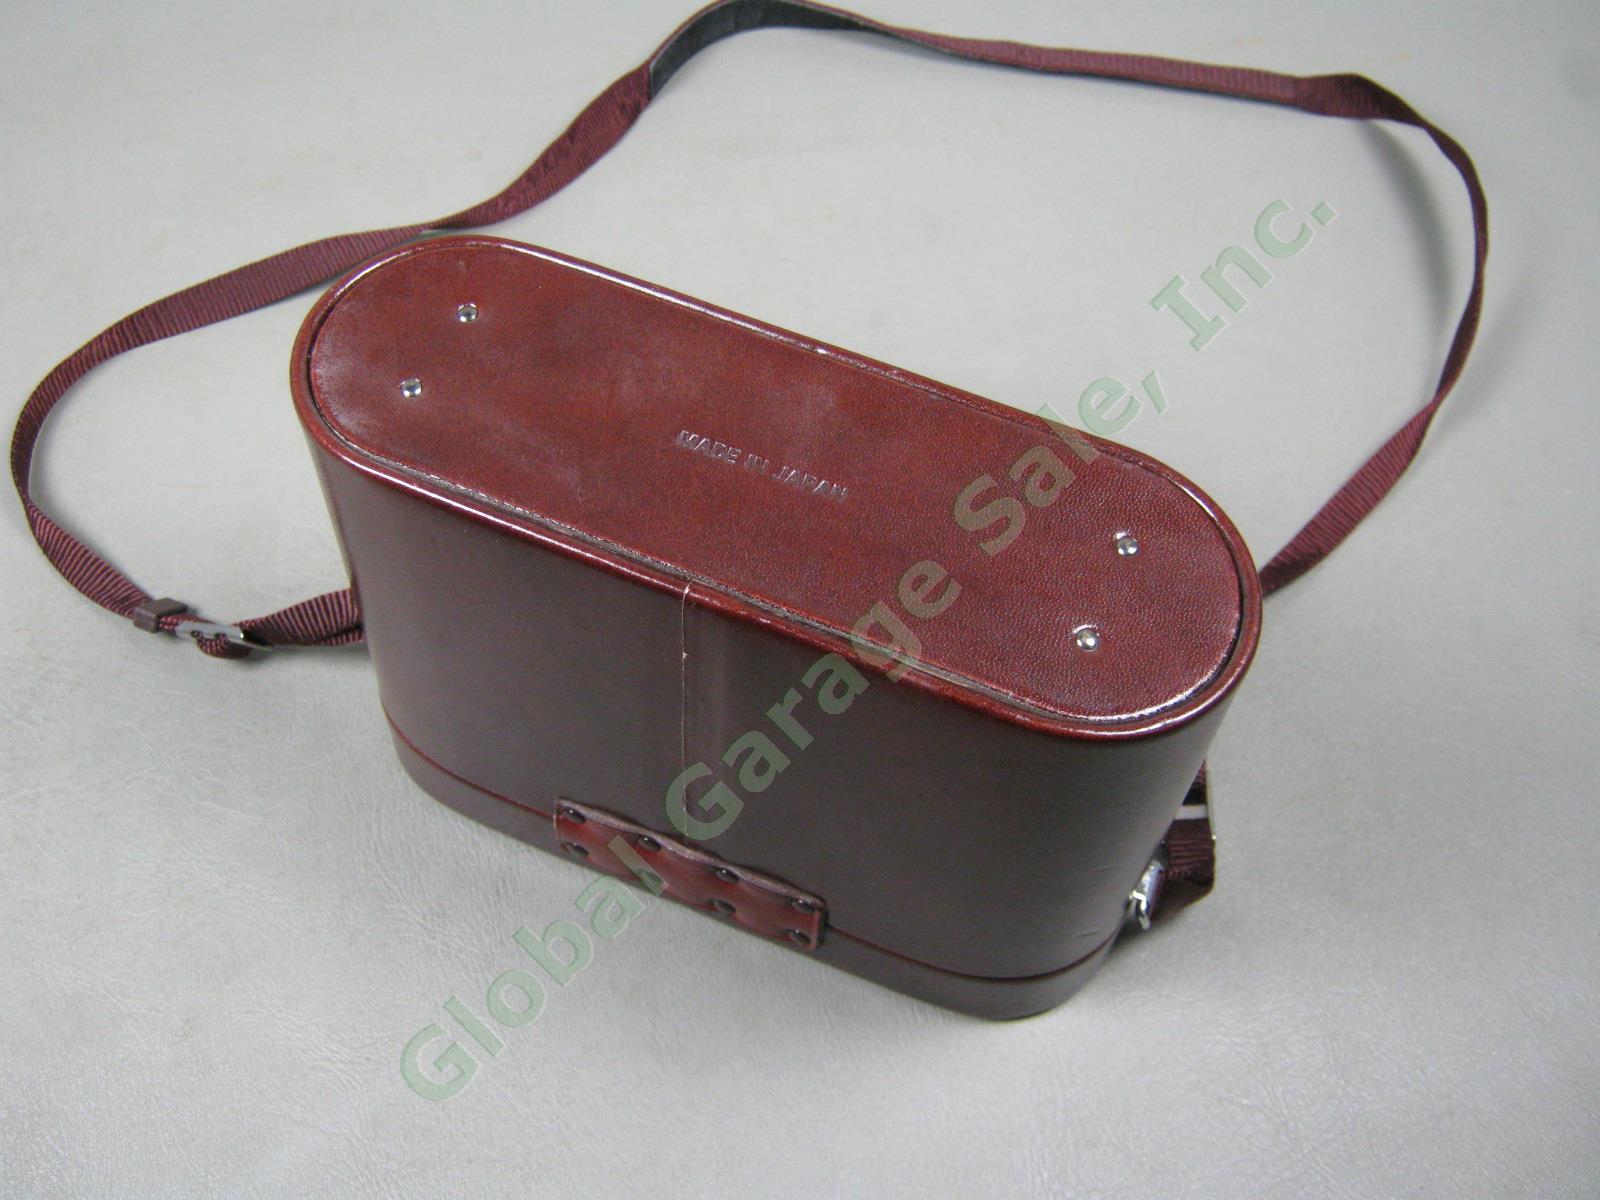 Nikon 10x35 6.6 WF binoculars W/ Leather Case Shoulder Strap Bundle Lot Japan NR 7